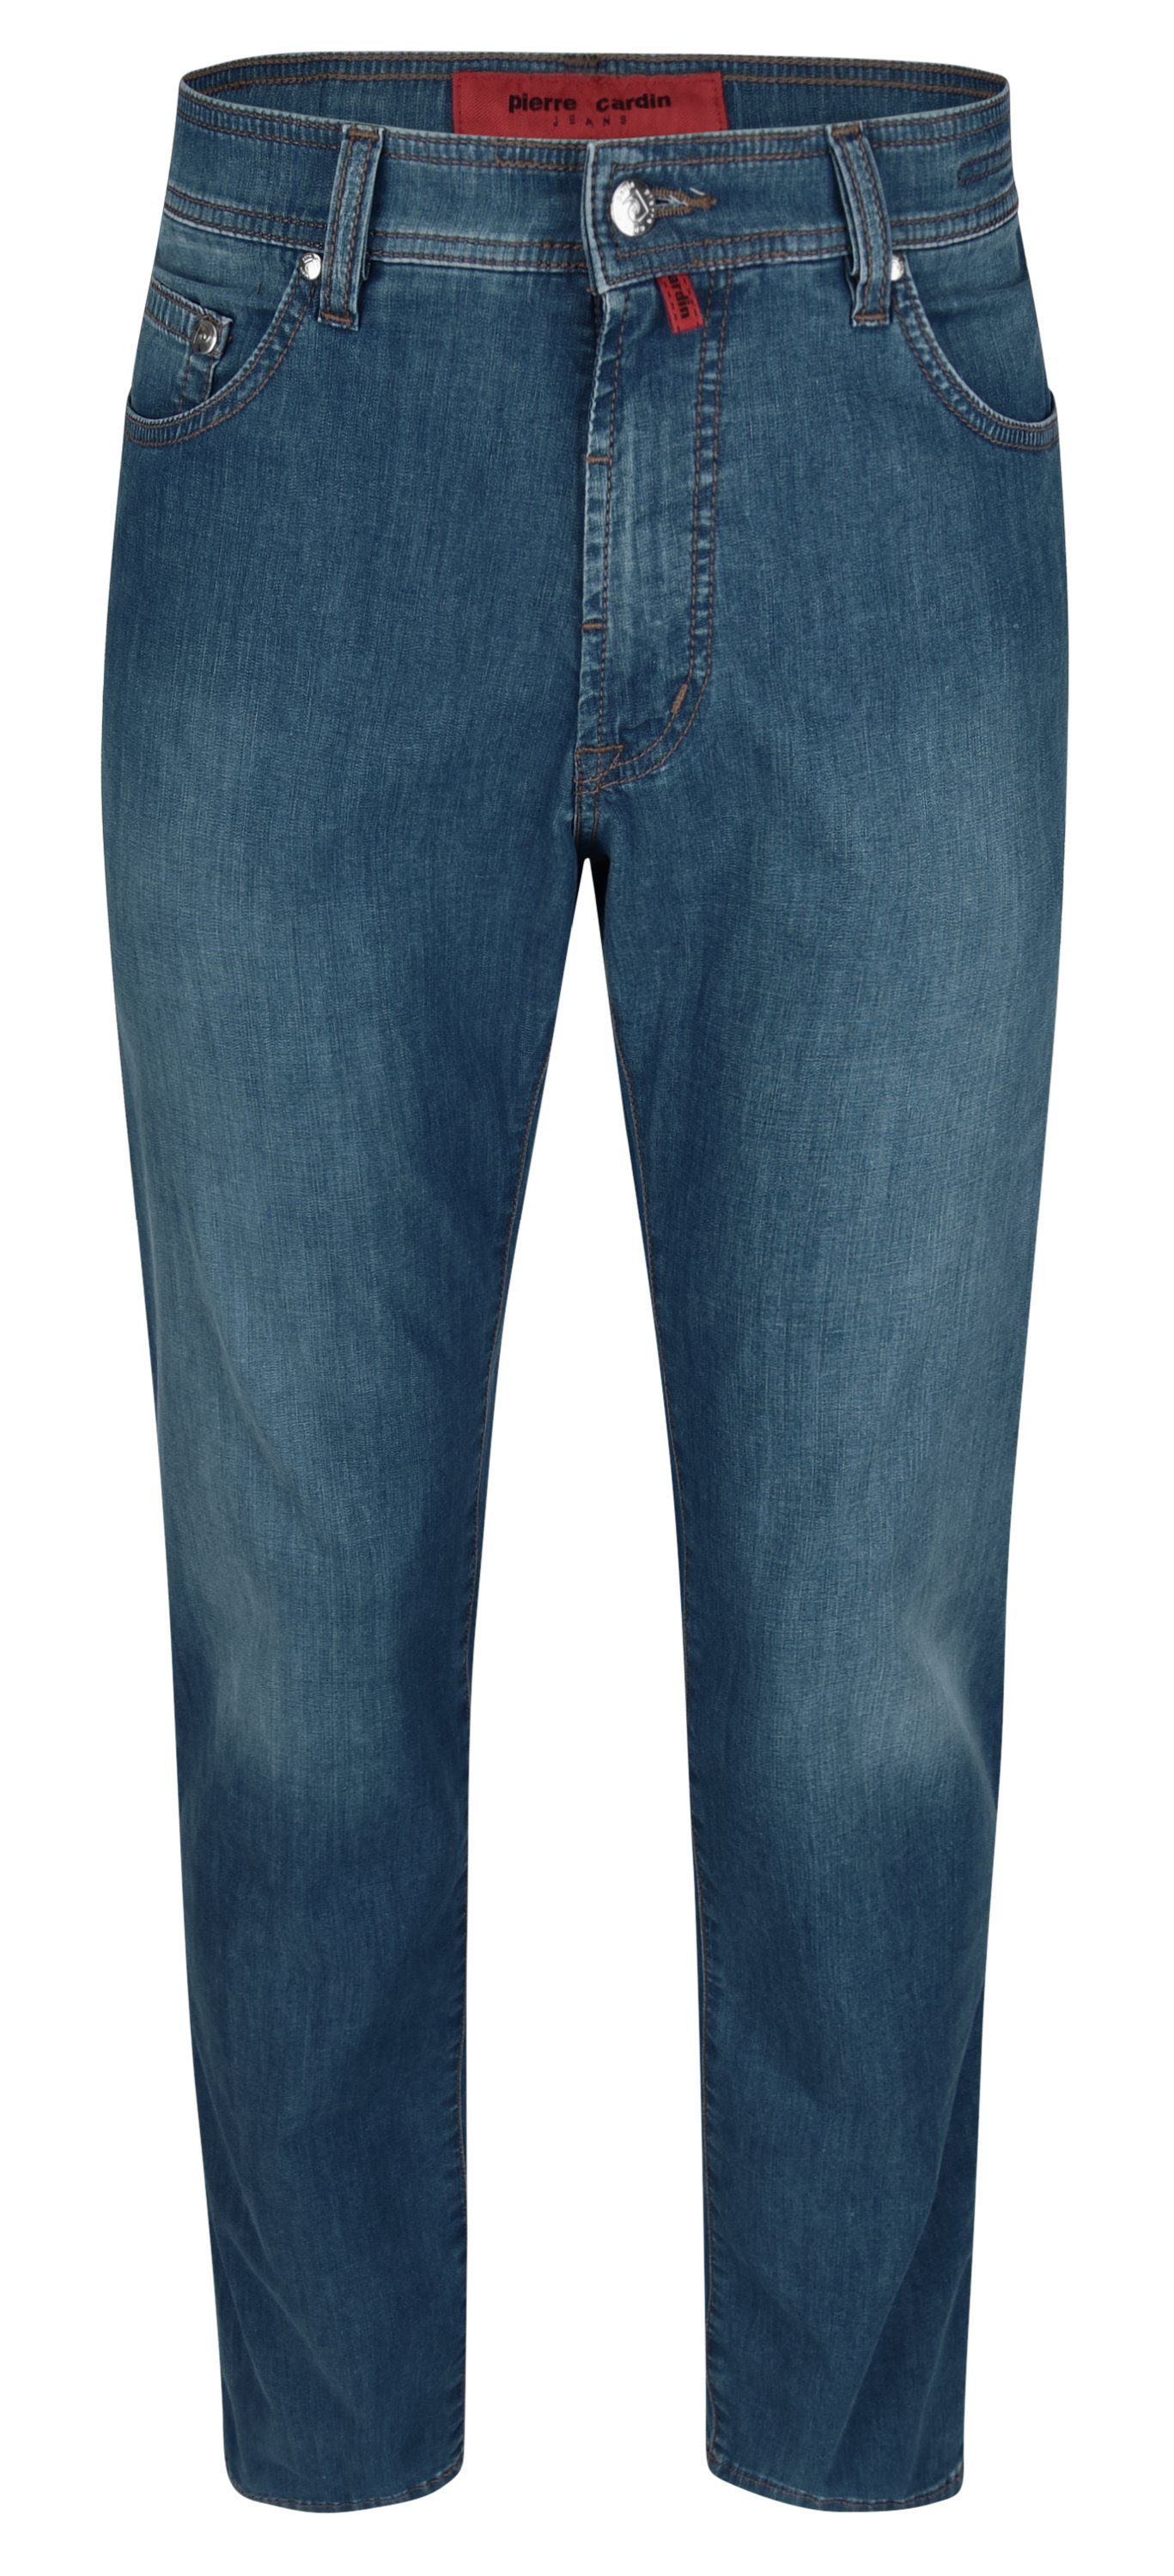 Pierre Cardin 5-Pocket-Jeans PIERRE CARDIN DEAUVILLE summer air touch blue green used 31961 7635.53